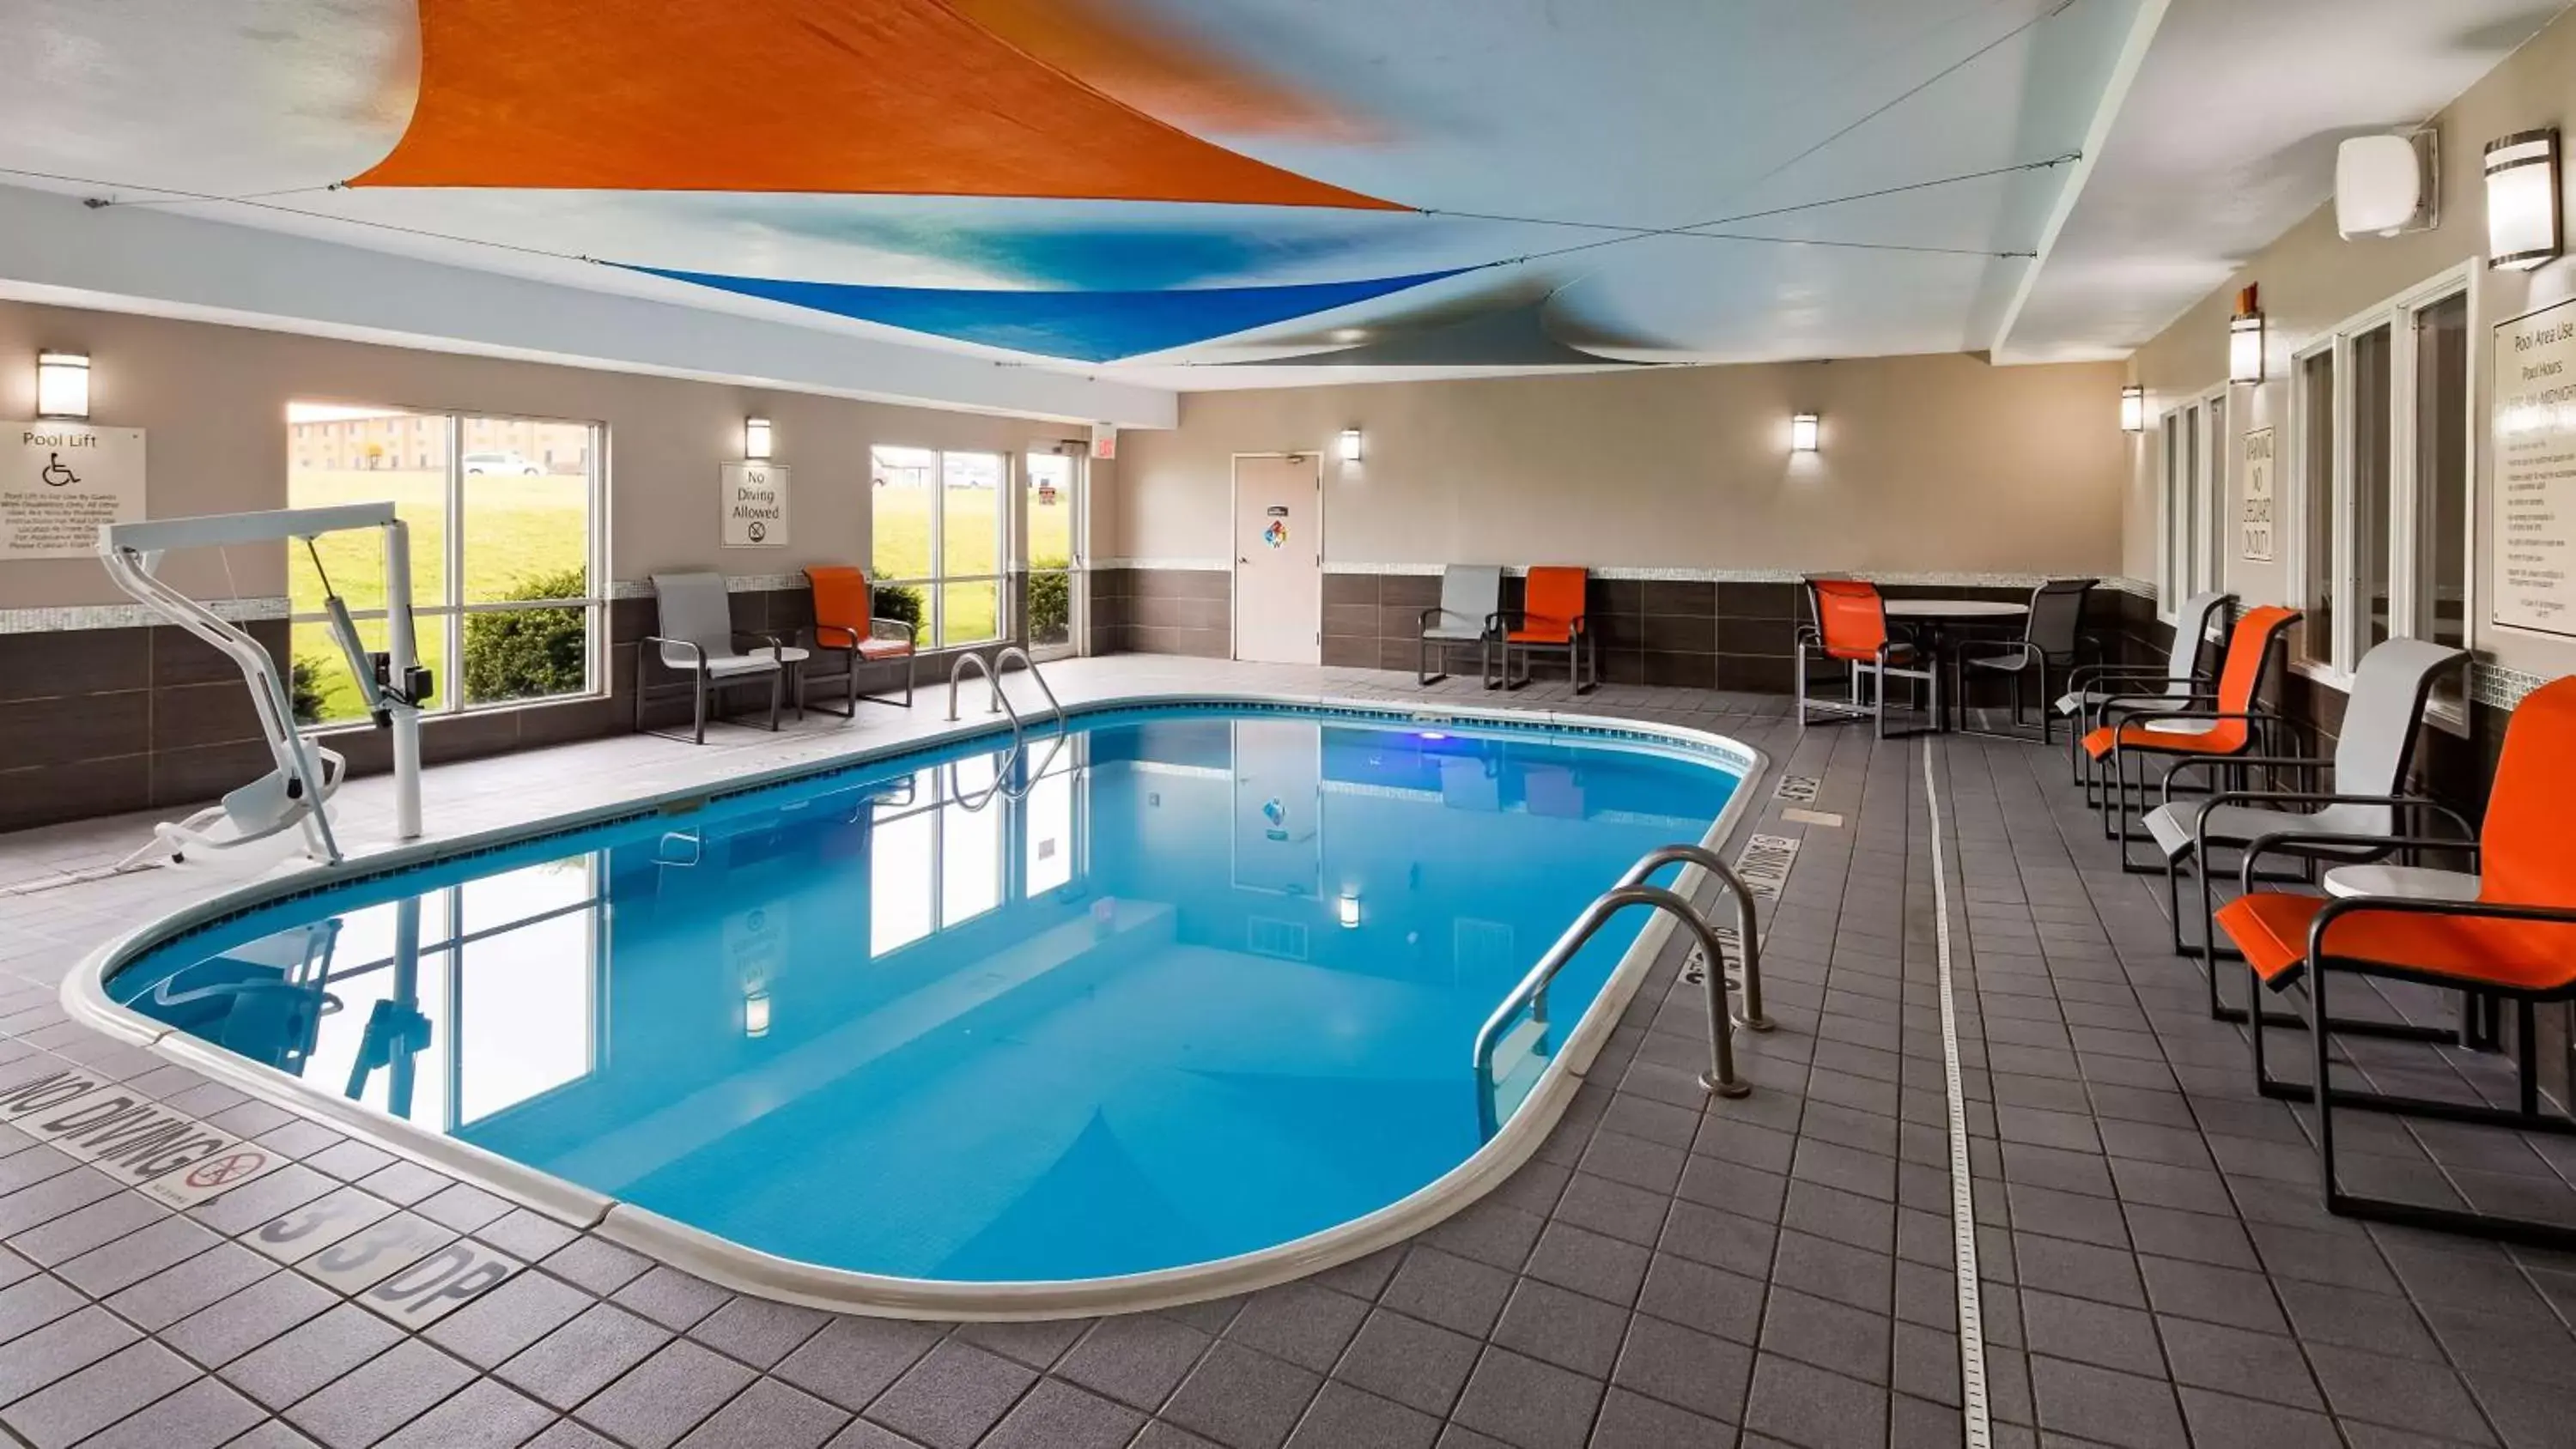 On site, Swimming Pool in Best Western Pearl City Inn